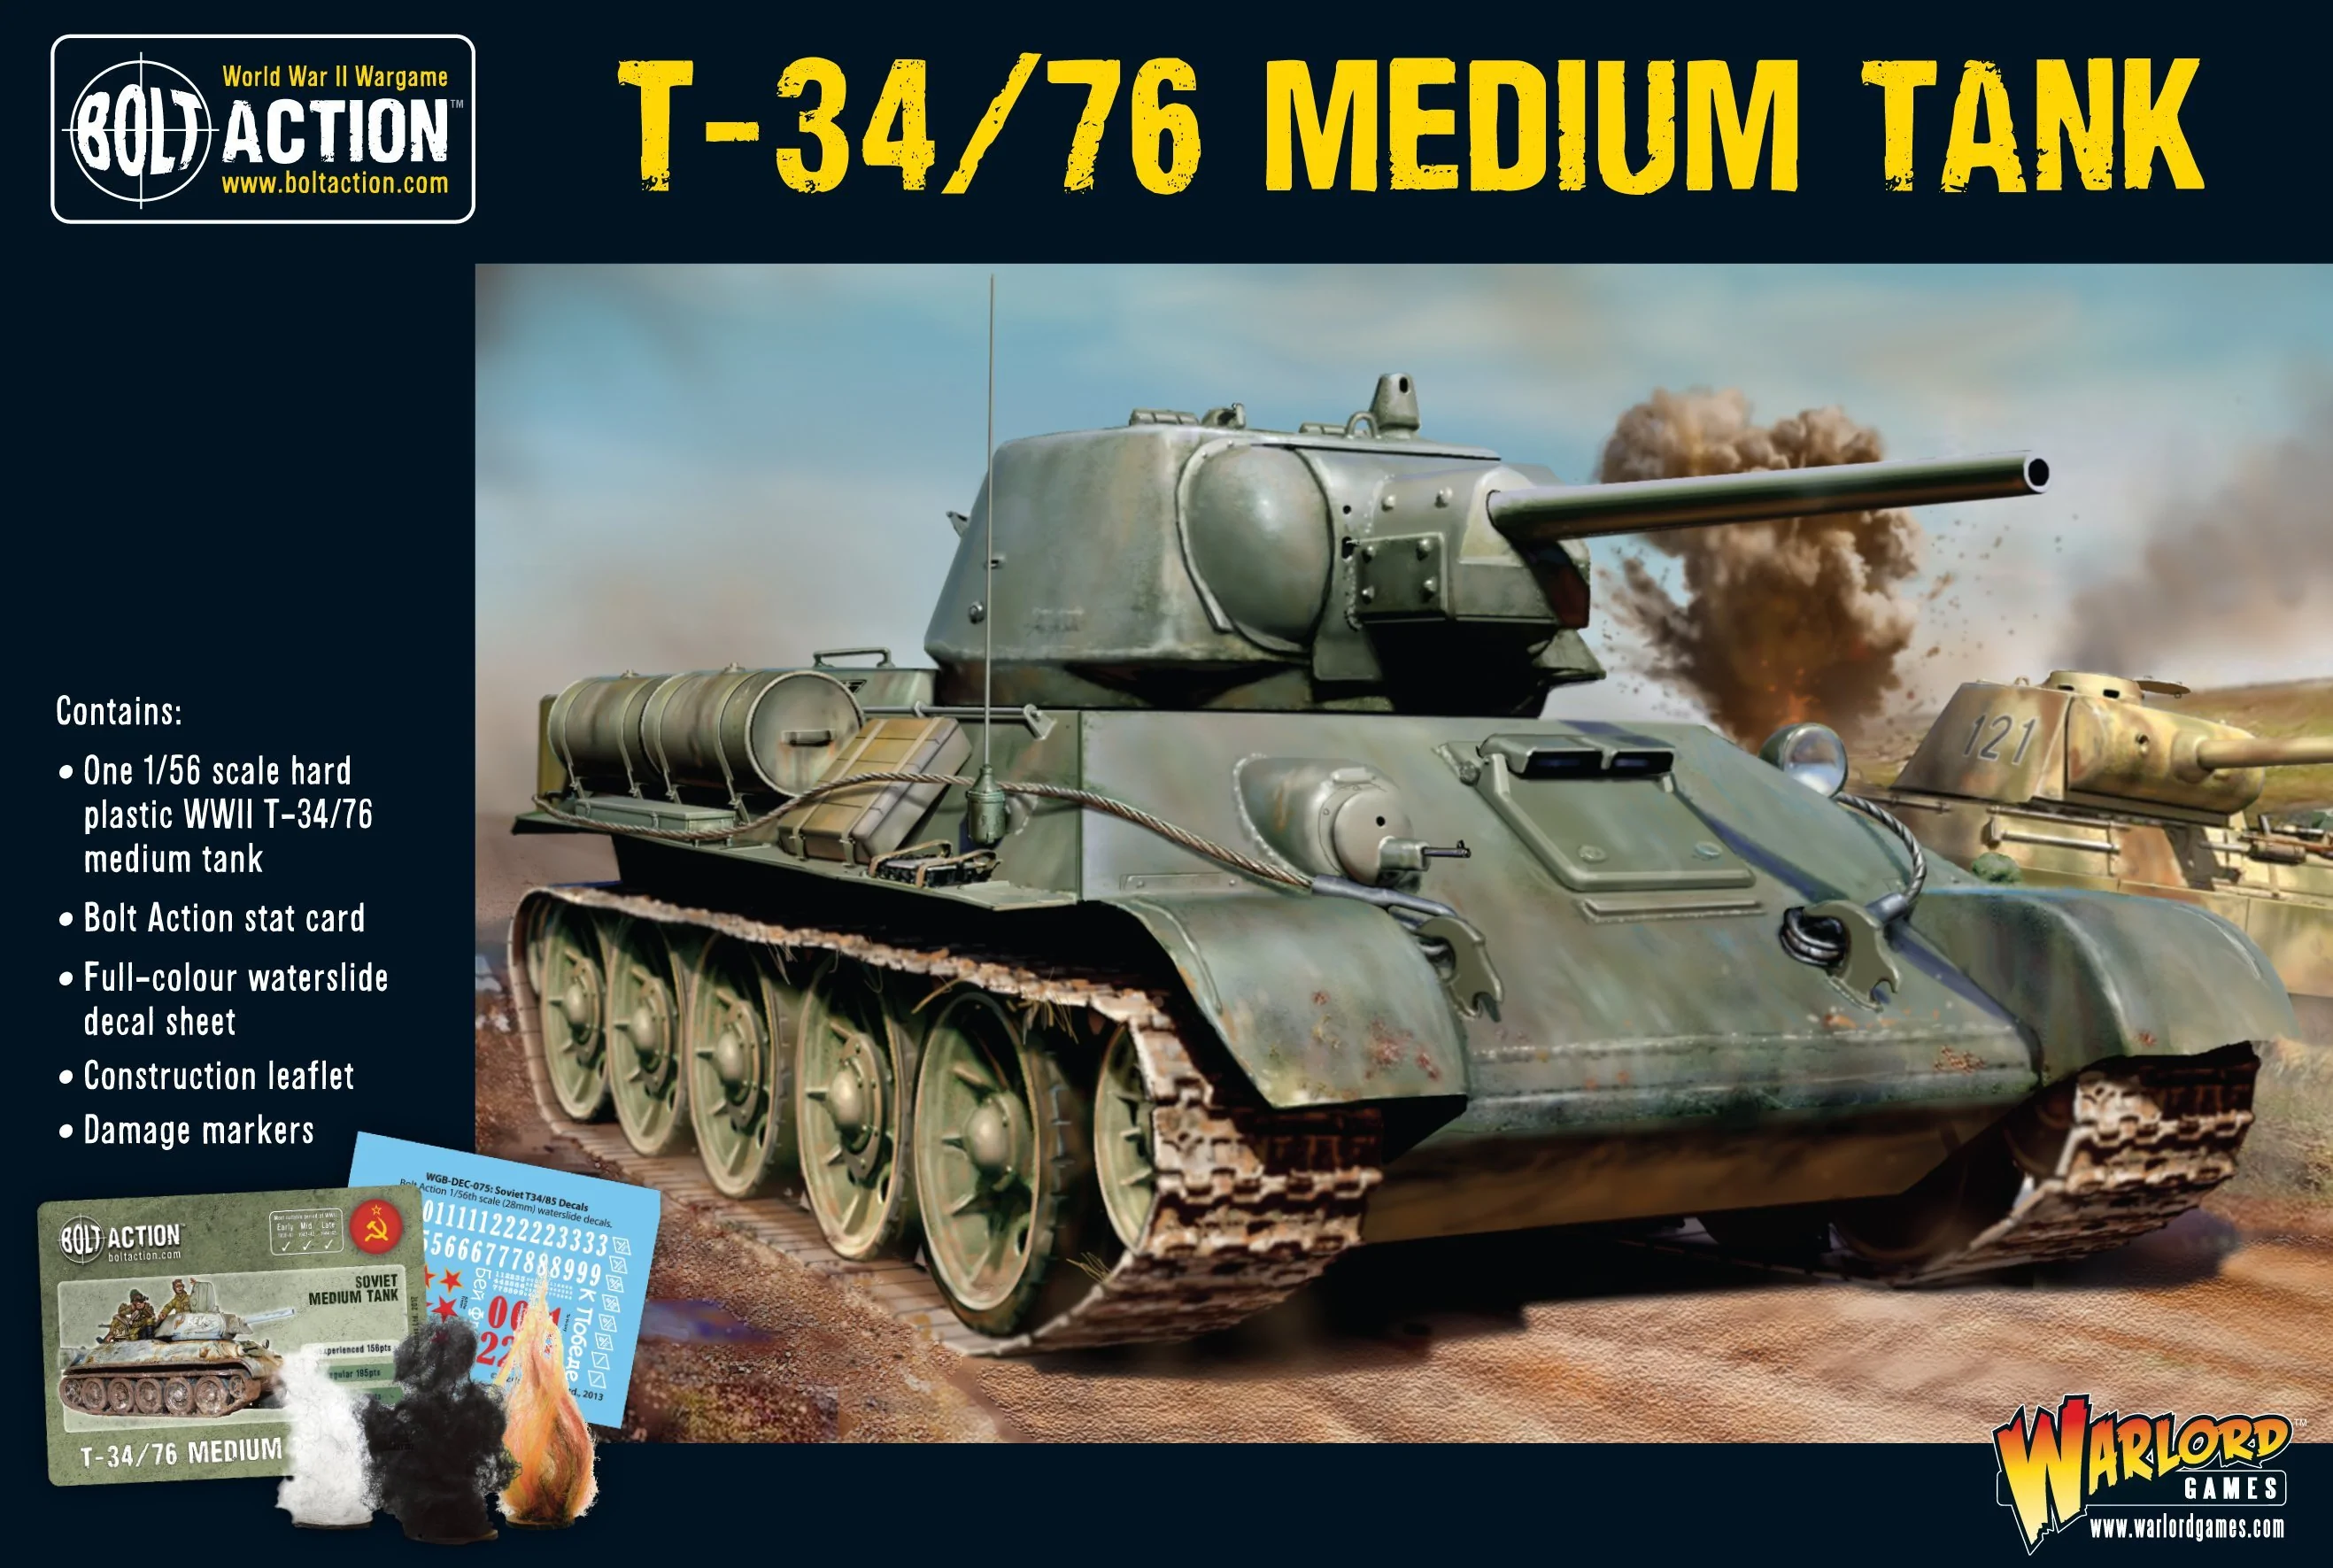 402014007_T-34_76_medium_tank_box_front